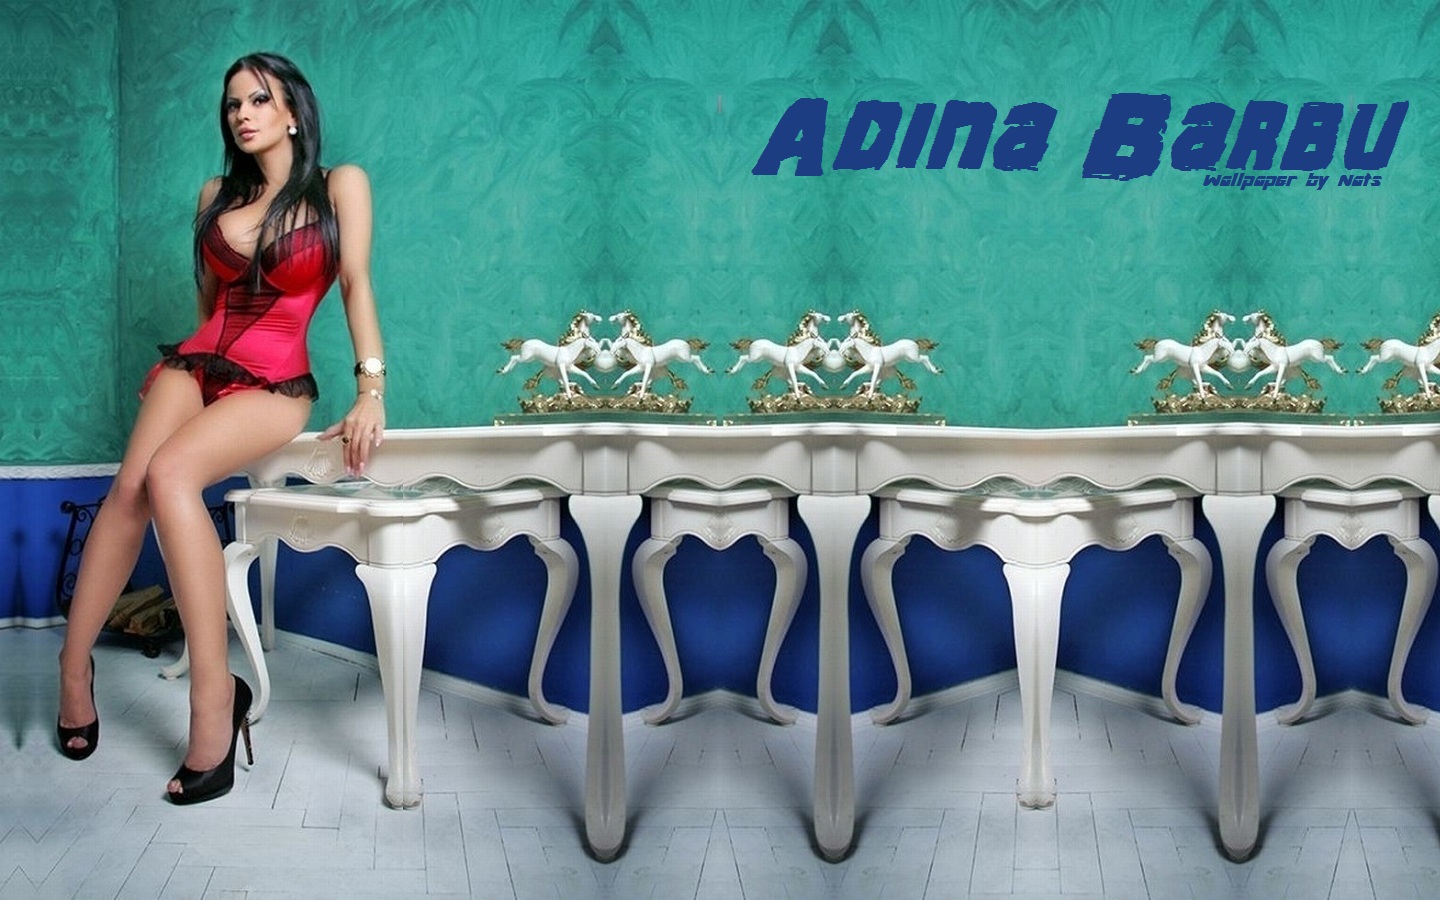 Download full size Adina Barbu wallpaper / Celebrities Female / 1440x900